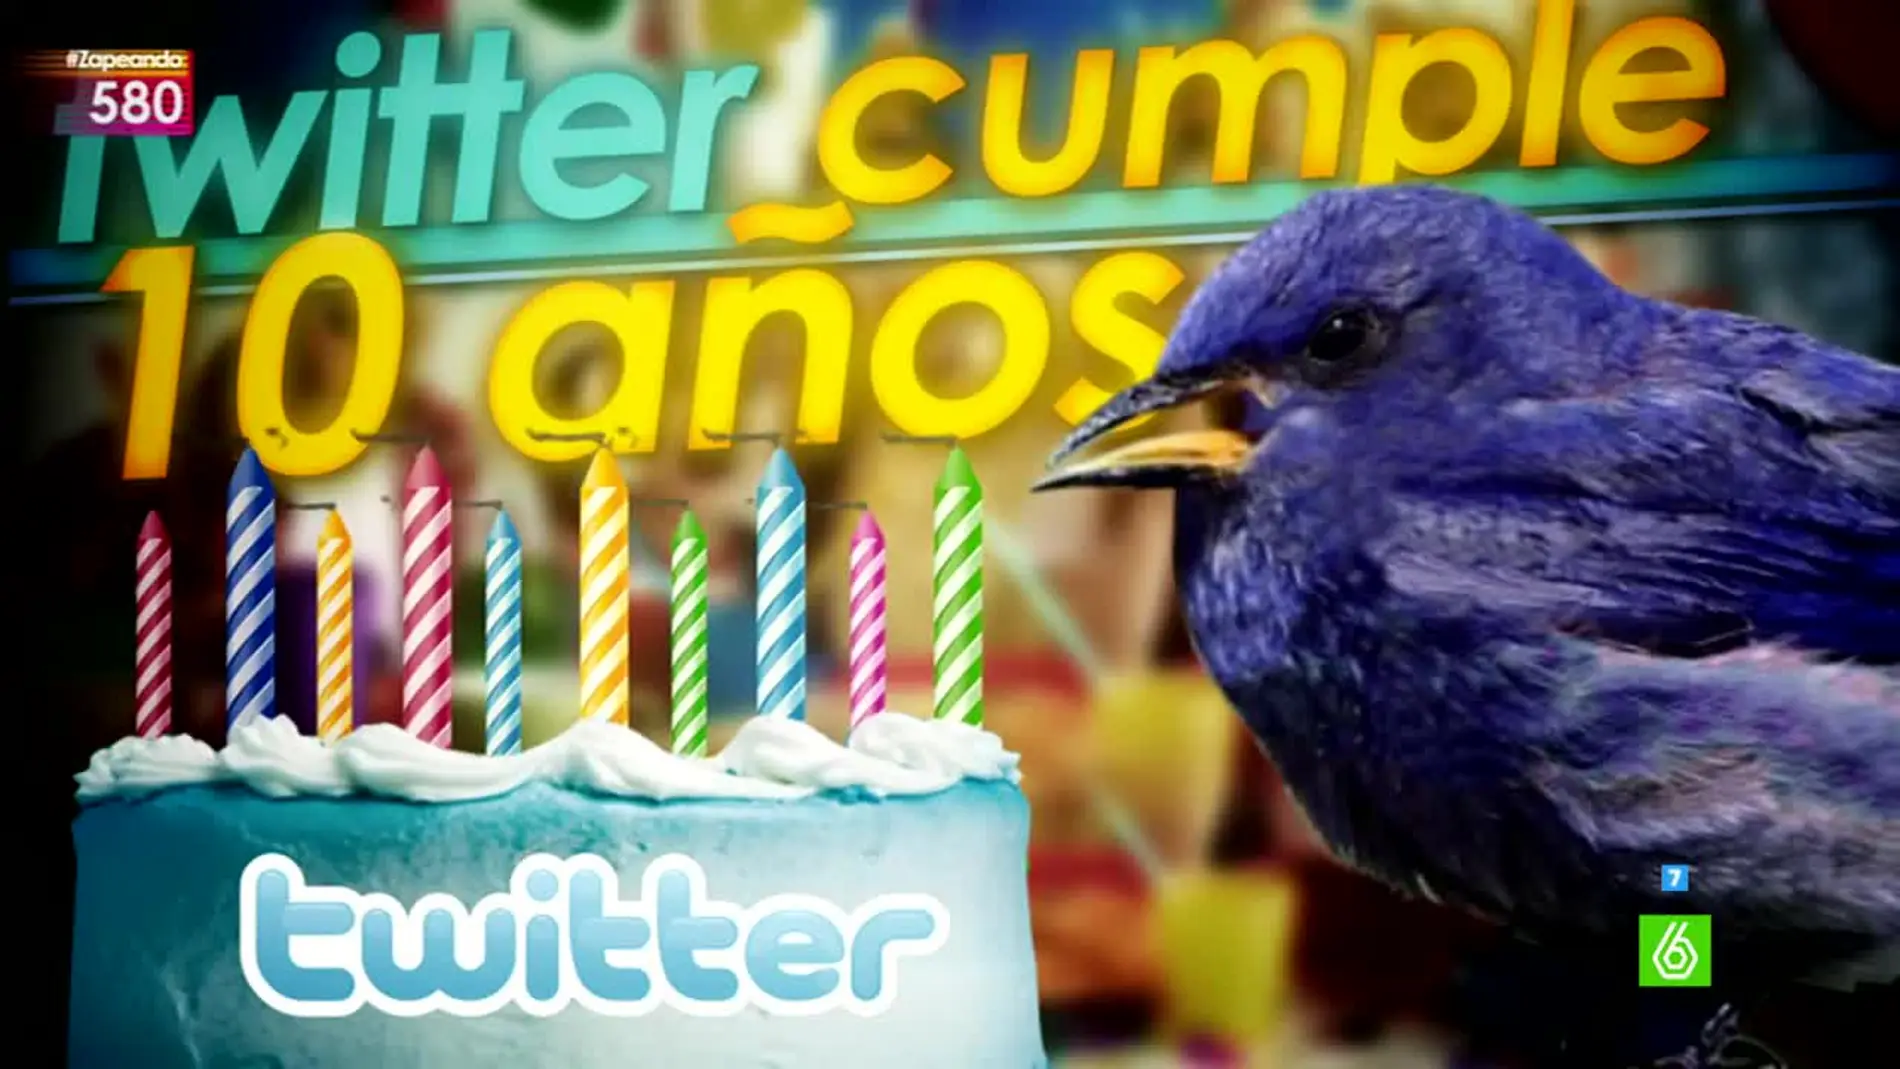 Décimo aniversario de Twitter